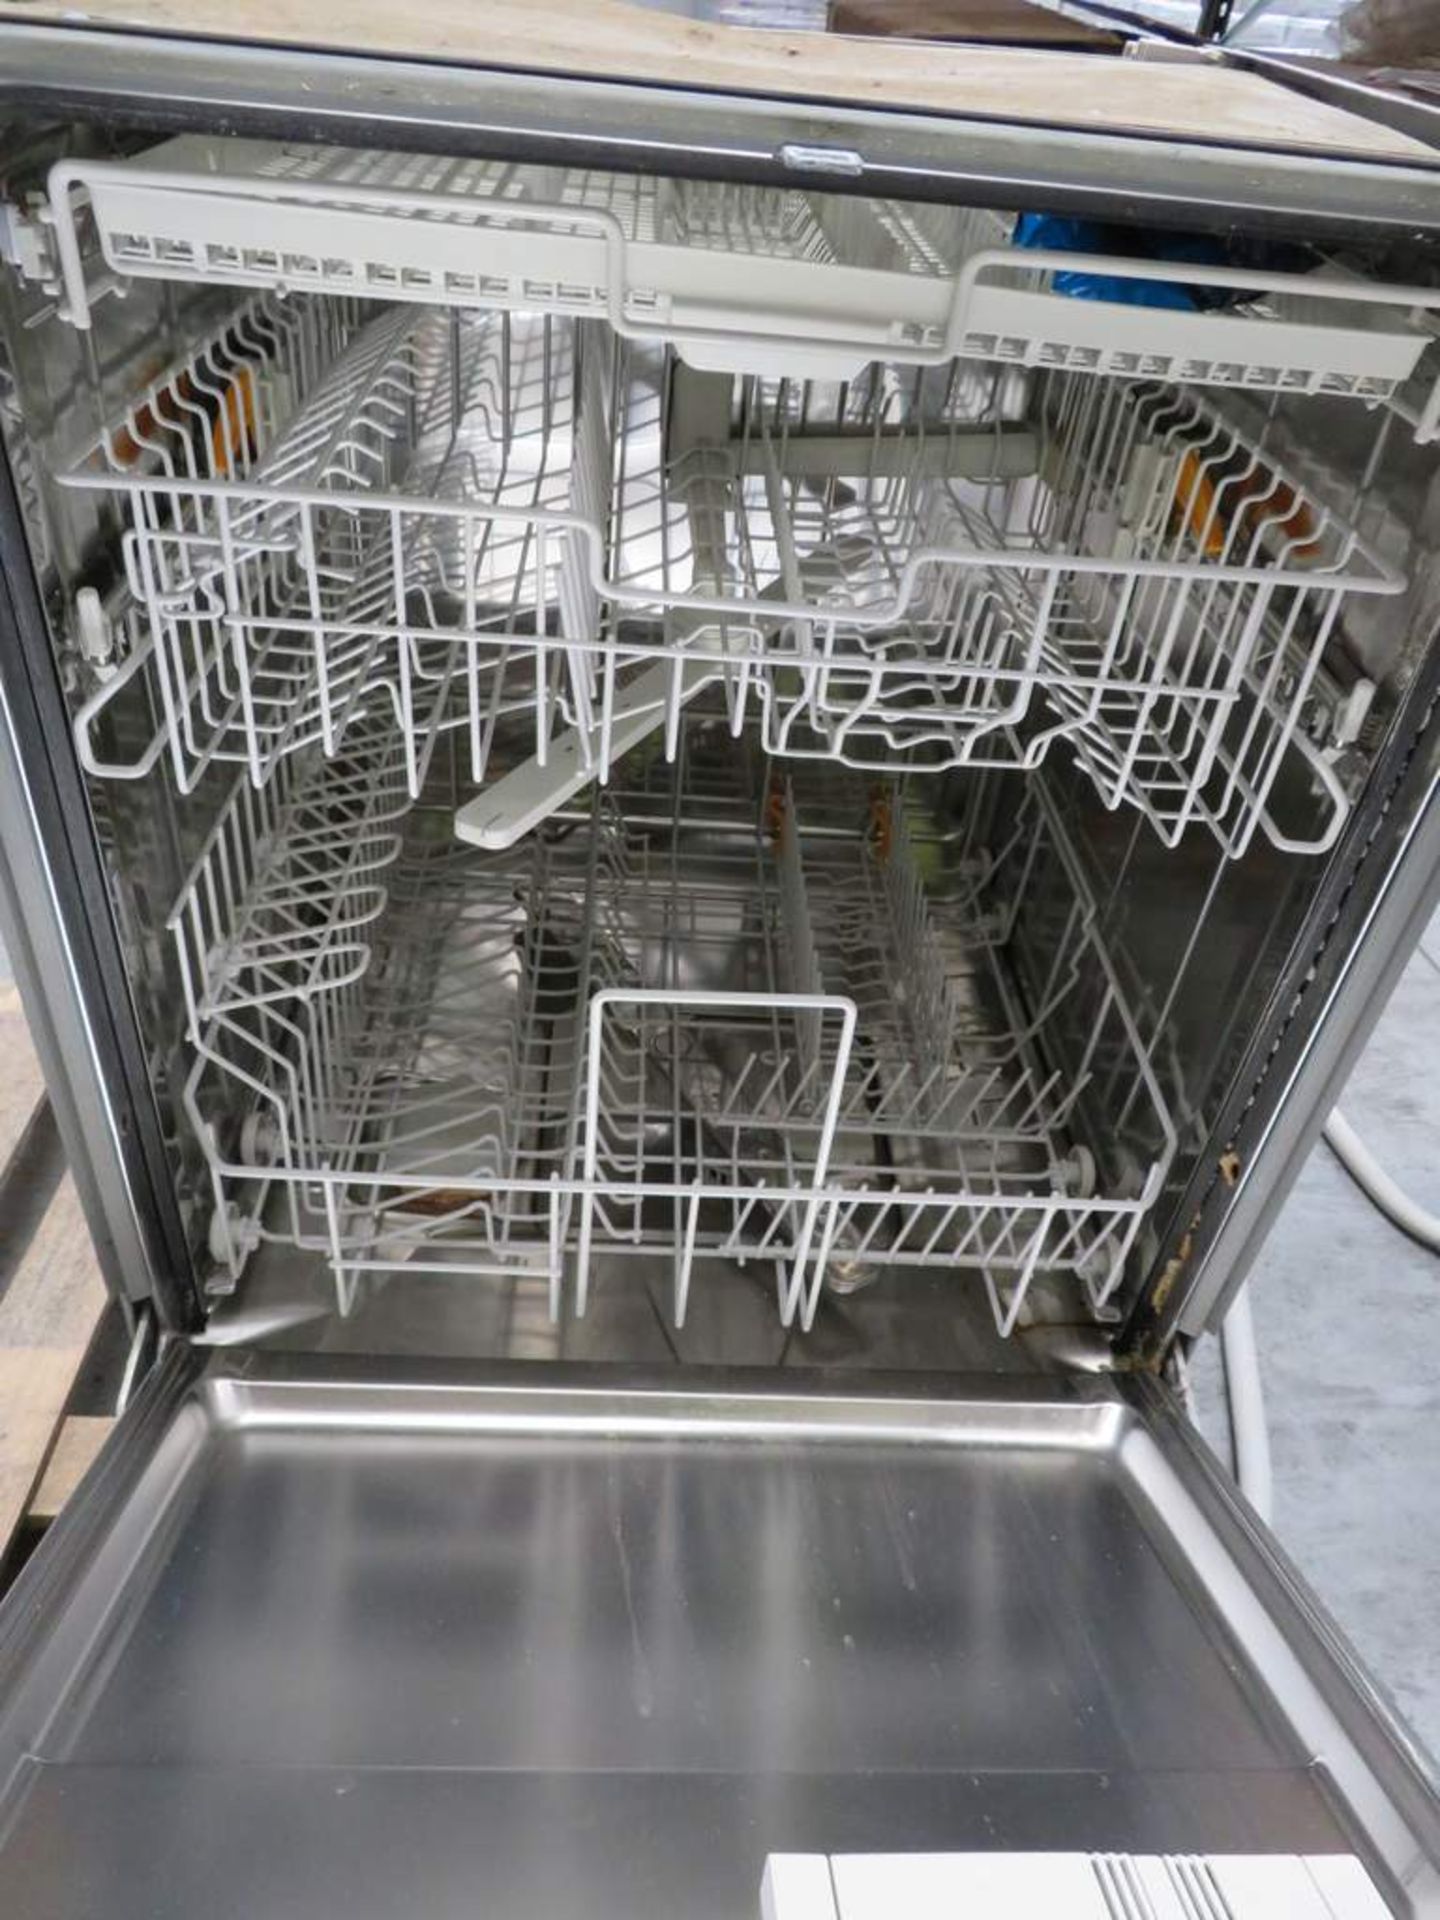 Miele Intergrated dishwasher. Model: G1272SCVi - Image 3 of 3